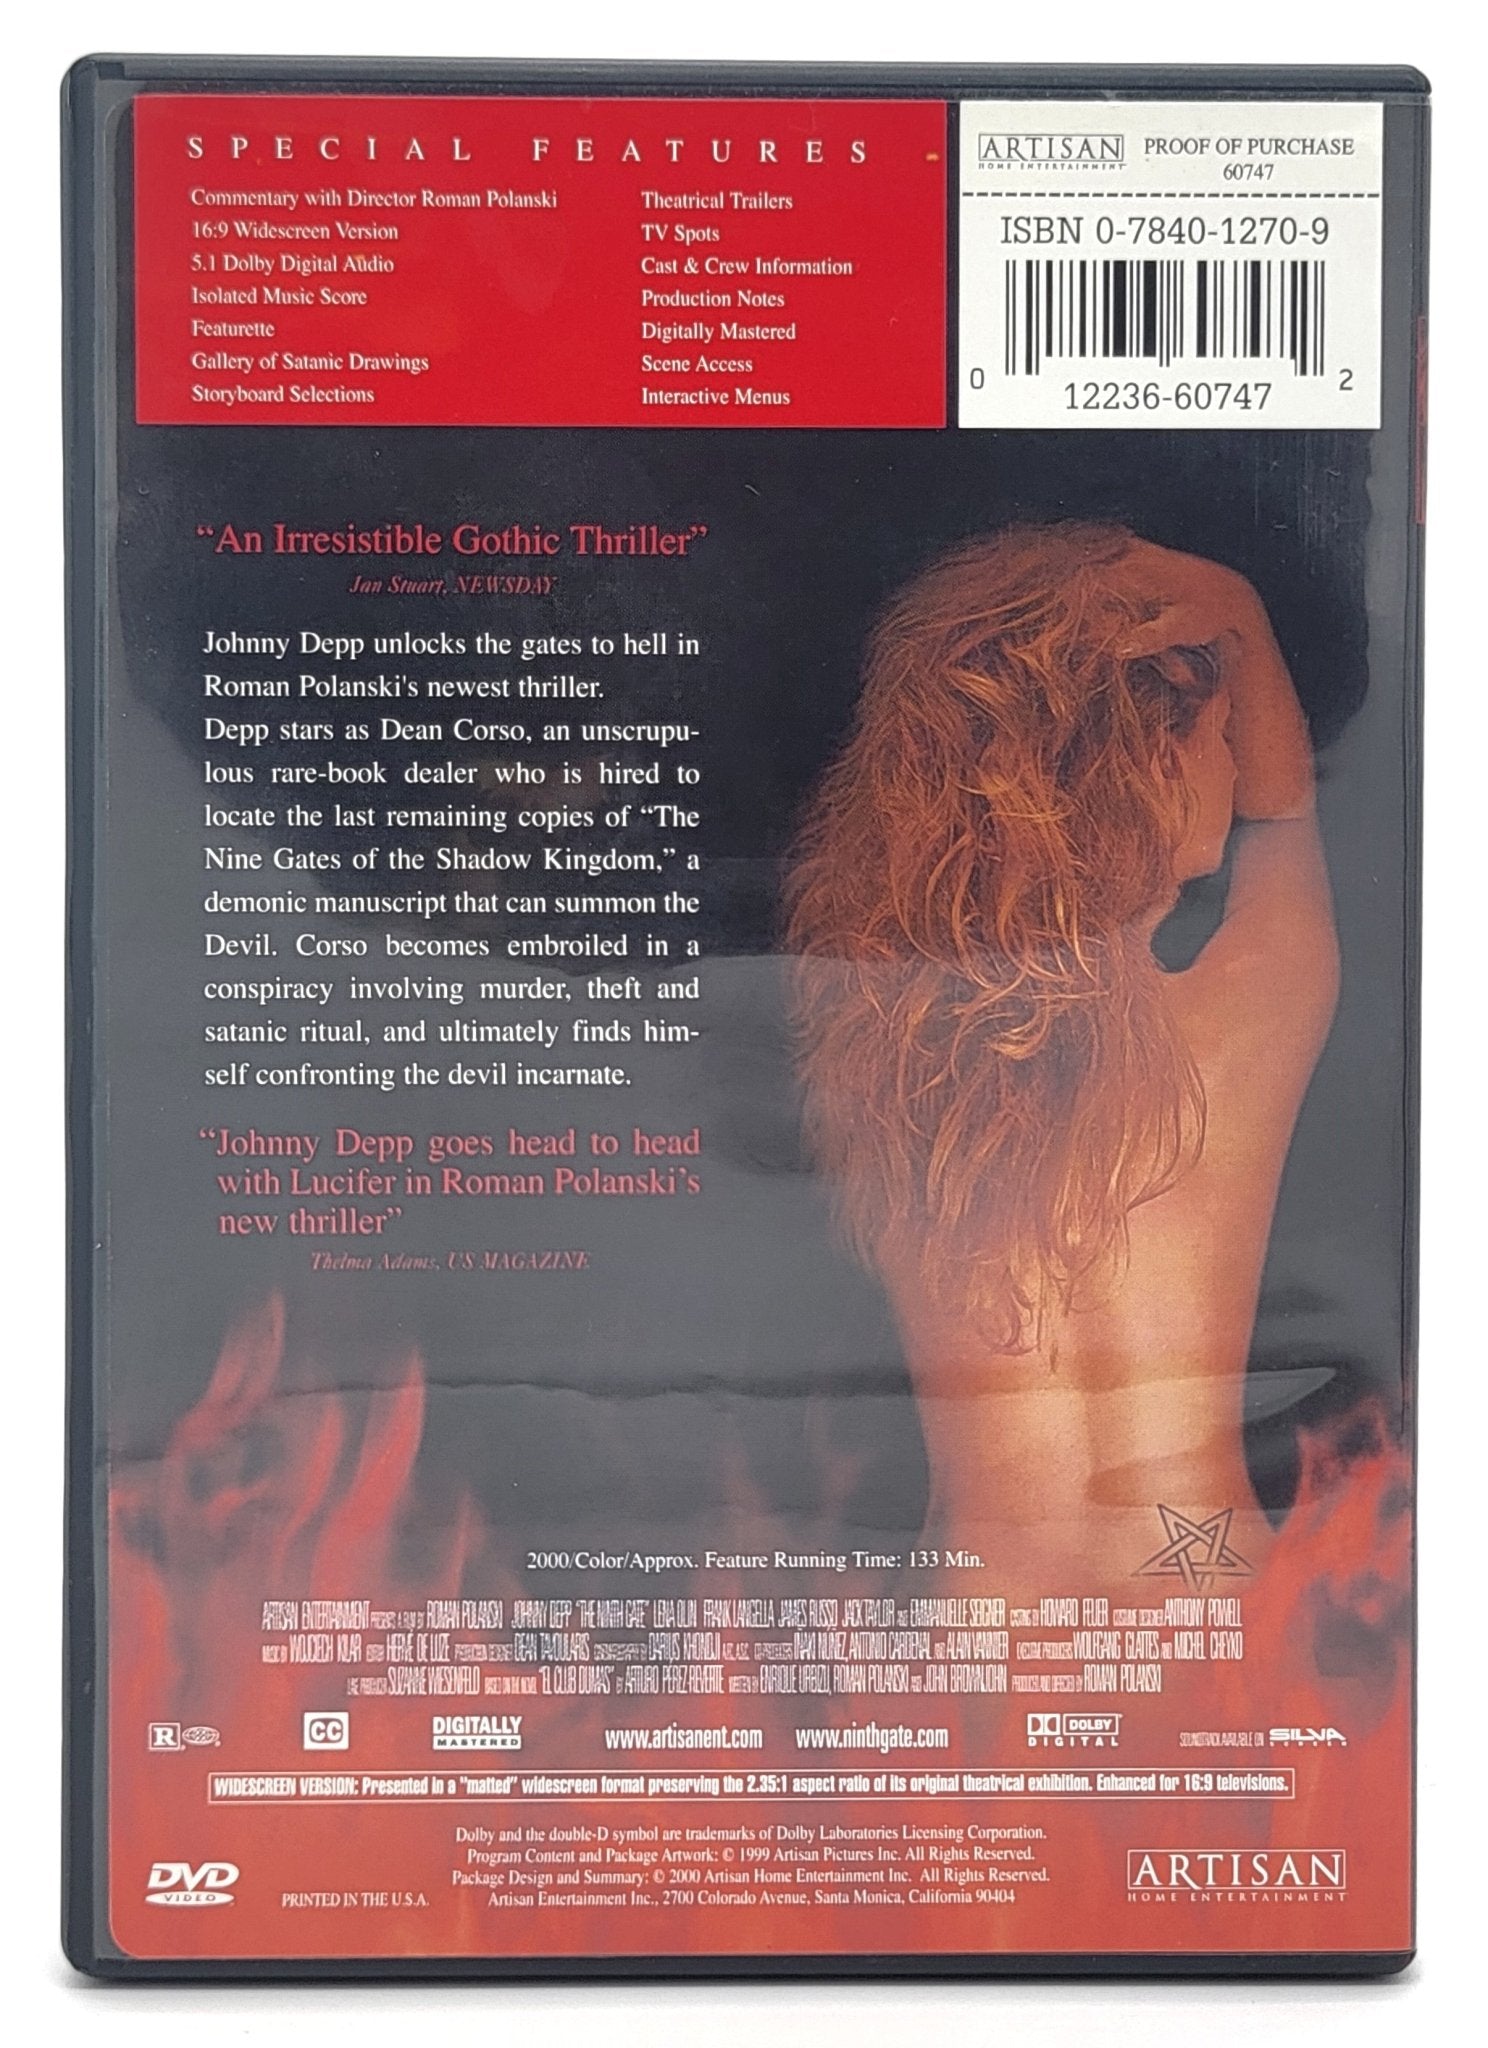 Artisan Home Entertainment - The Ninth Gate | DVD |Widescreen - DVD - Steady Bunny Shop